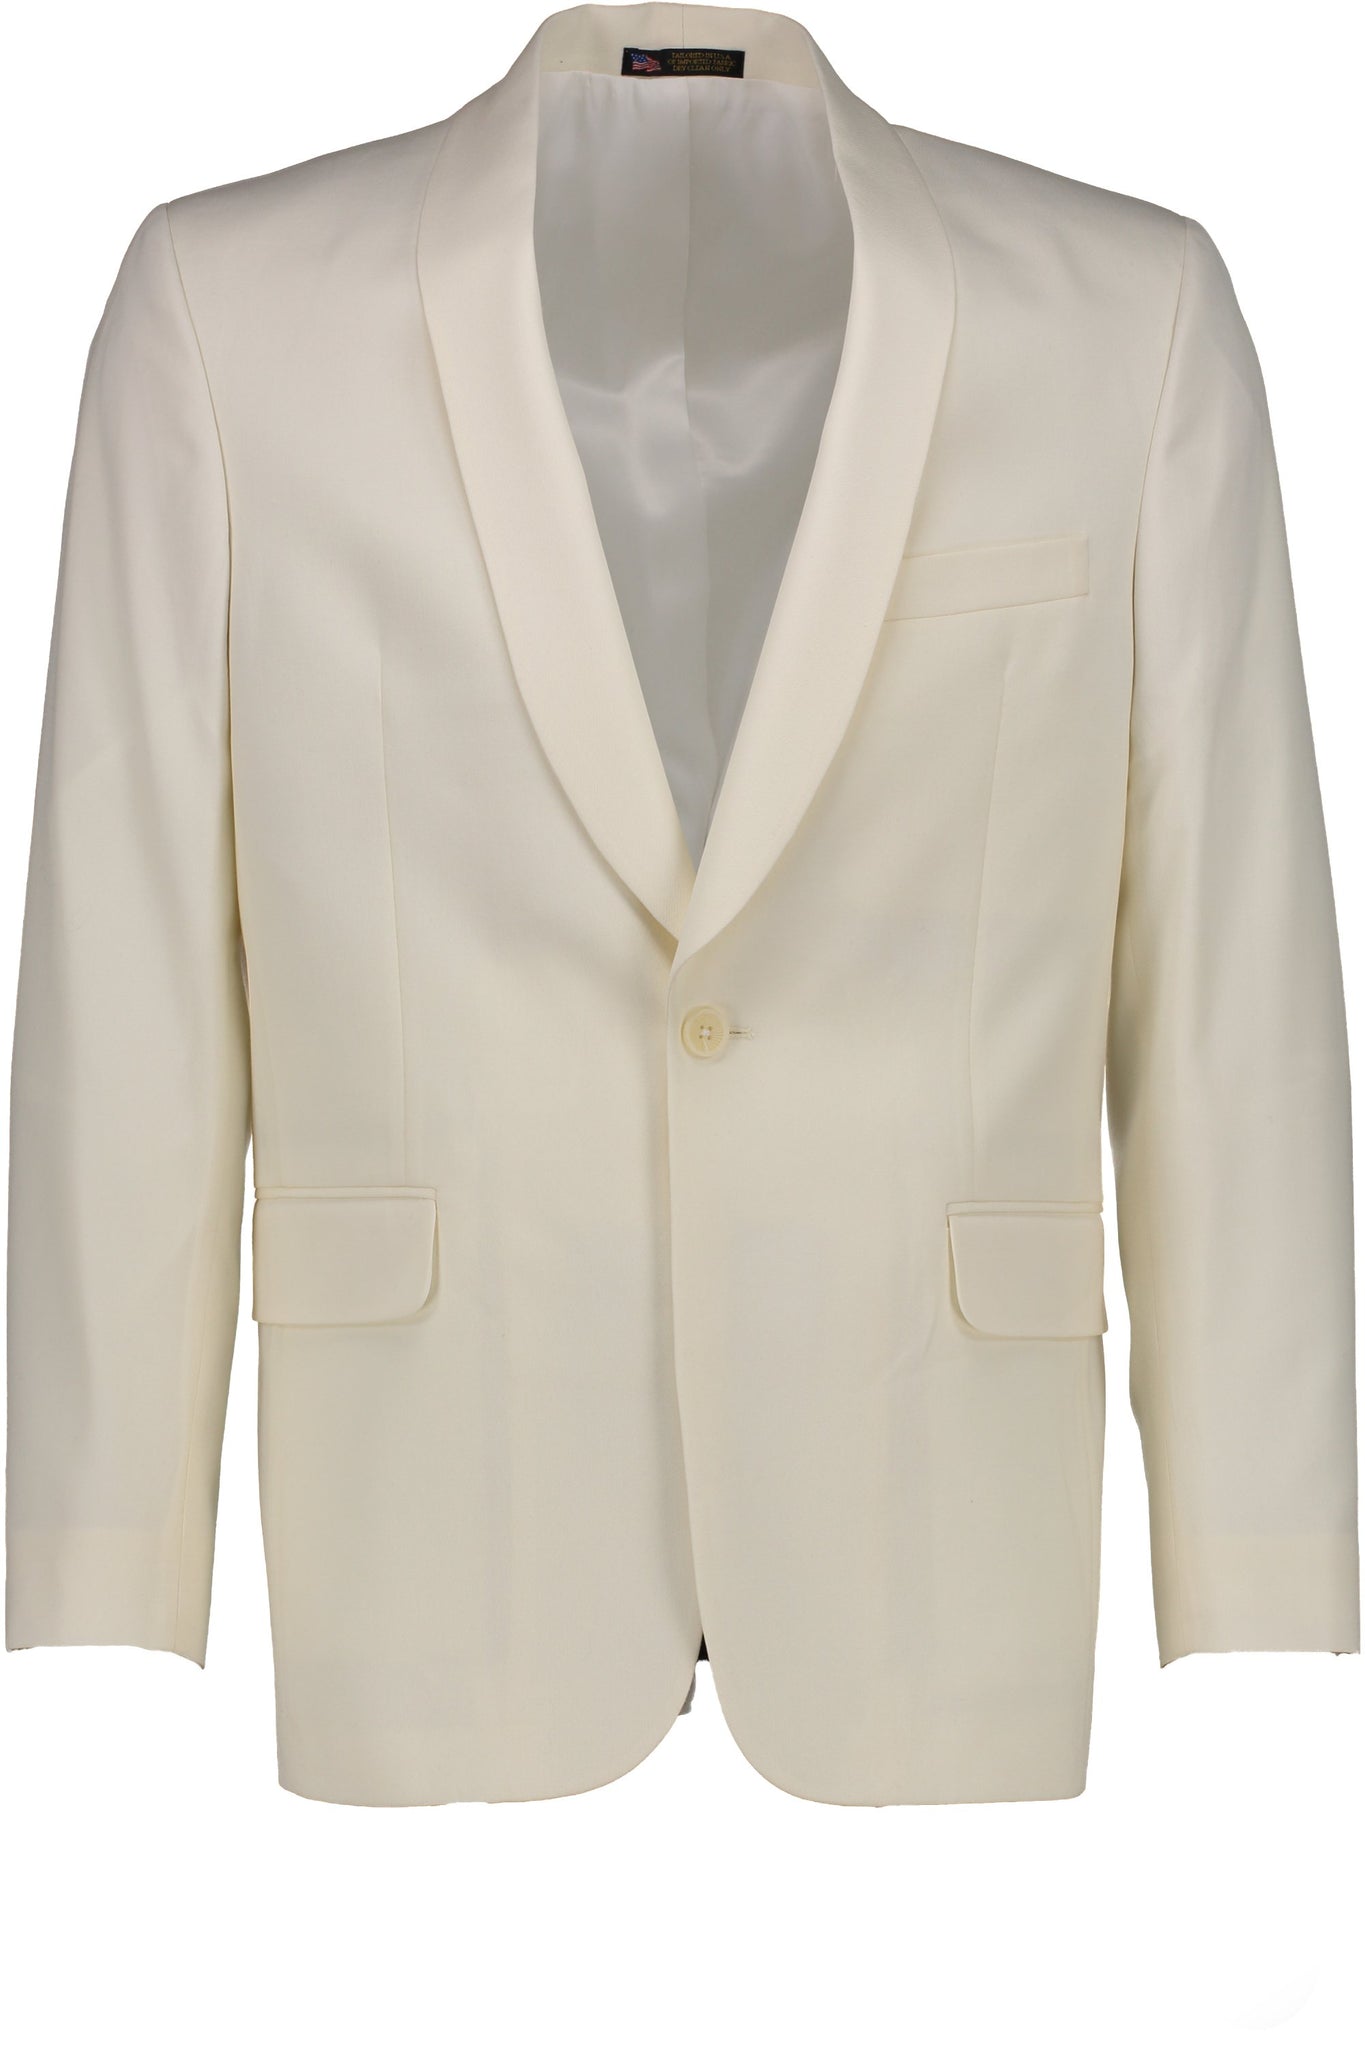 Classic Fit Ivory Wool Dinner Jacket with Cream Satin Shawl Collar -  Hardwick.com